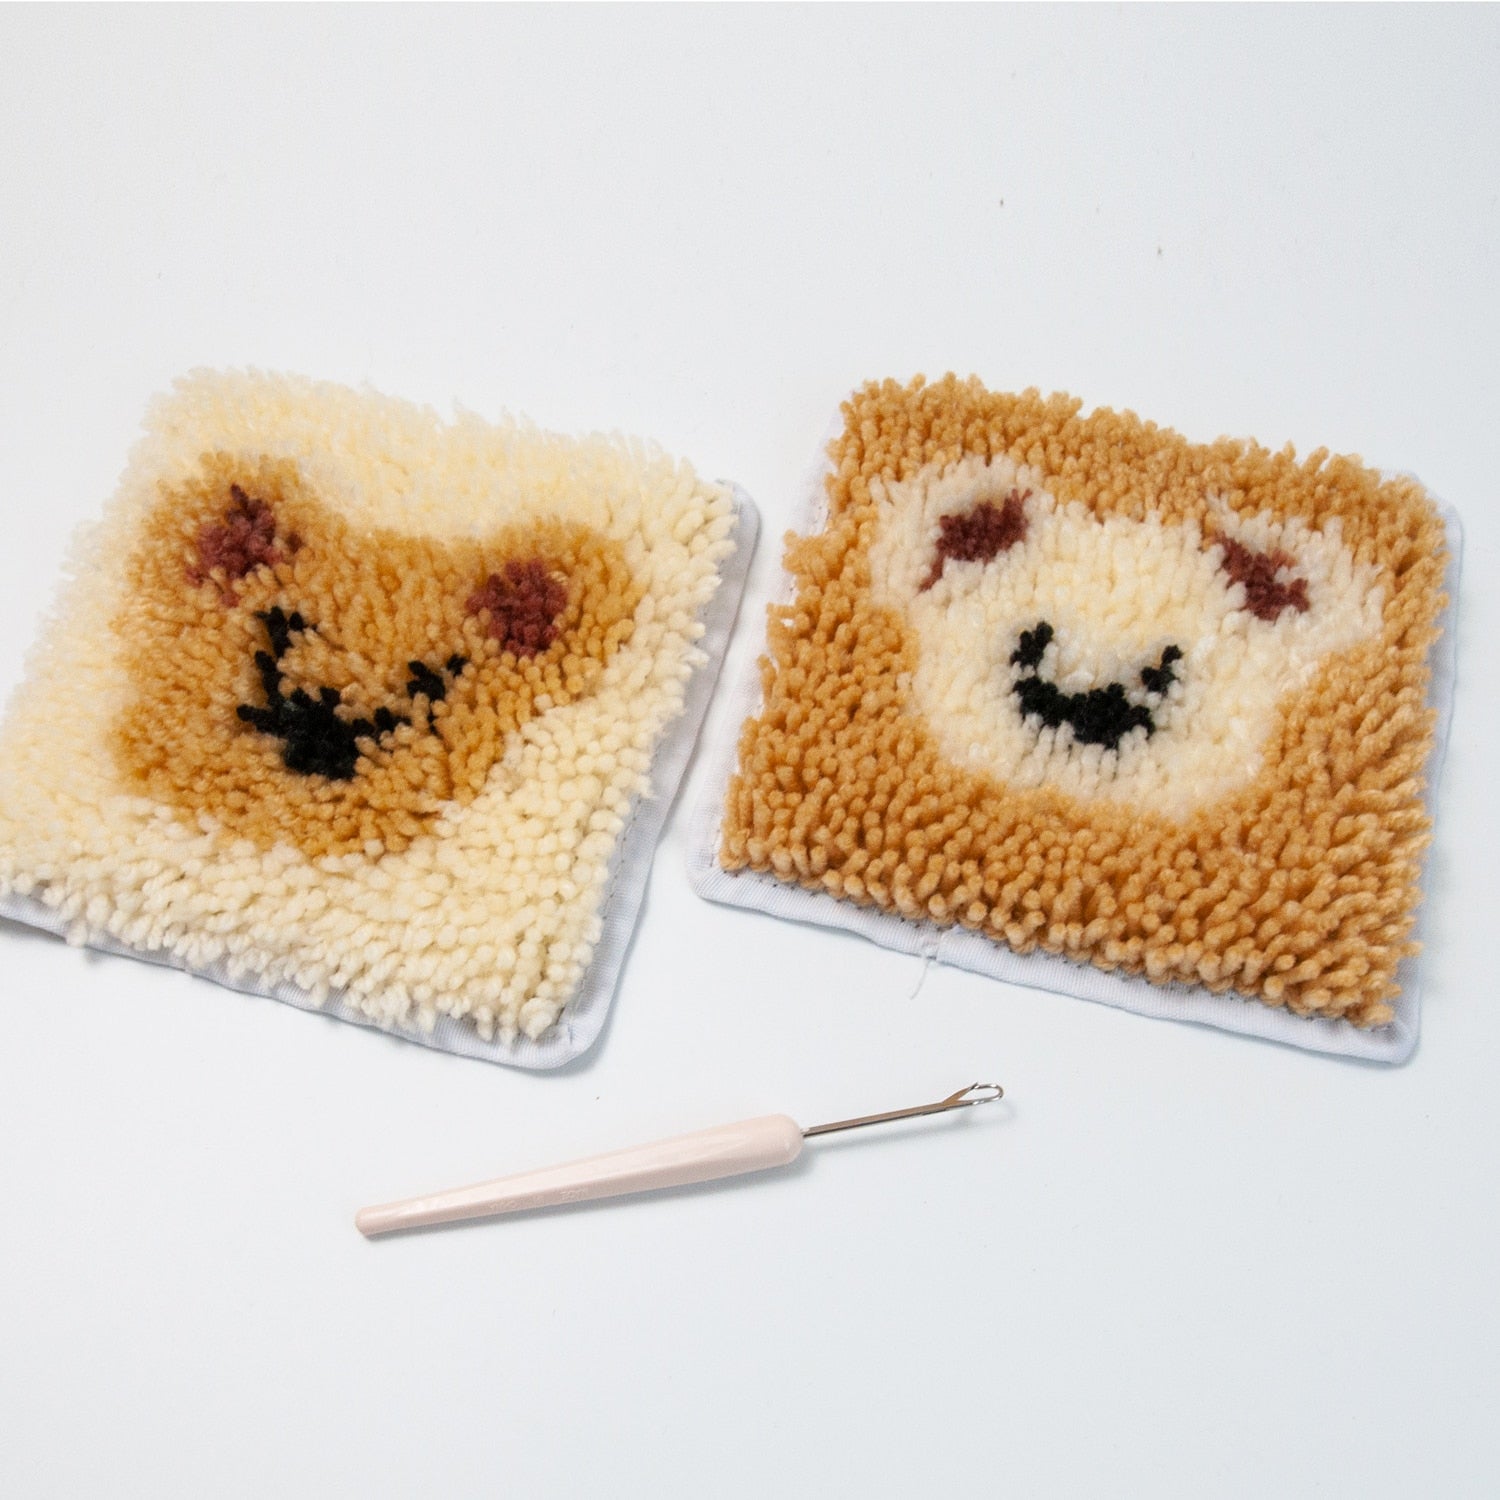 Mini Latch Hook Beginner Kits - Caramel Teddy Bears